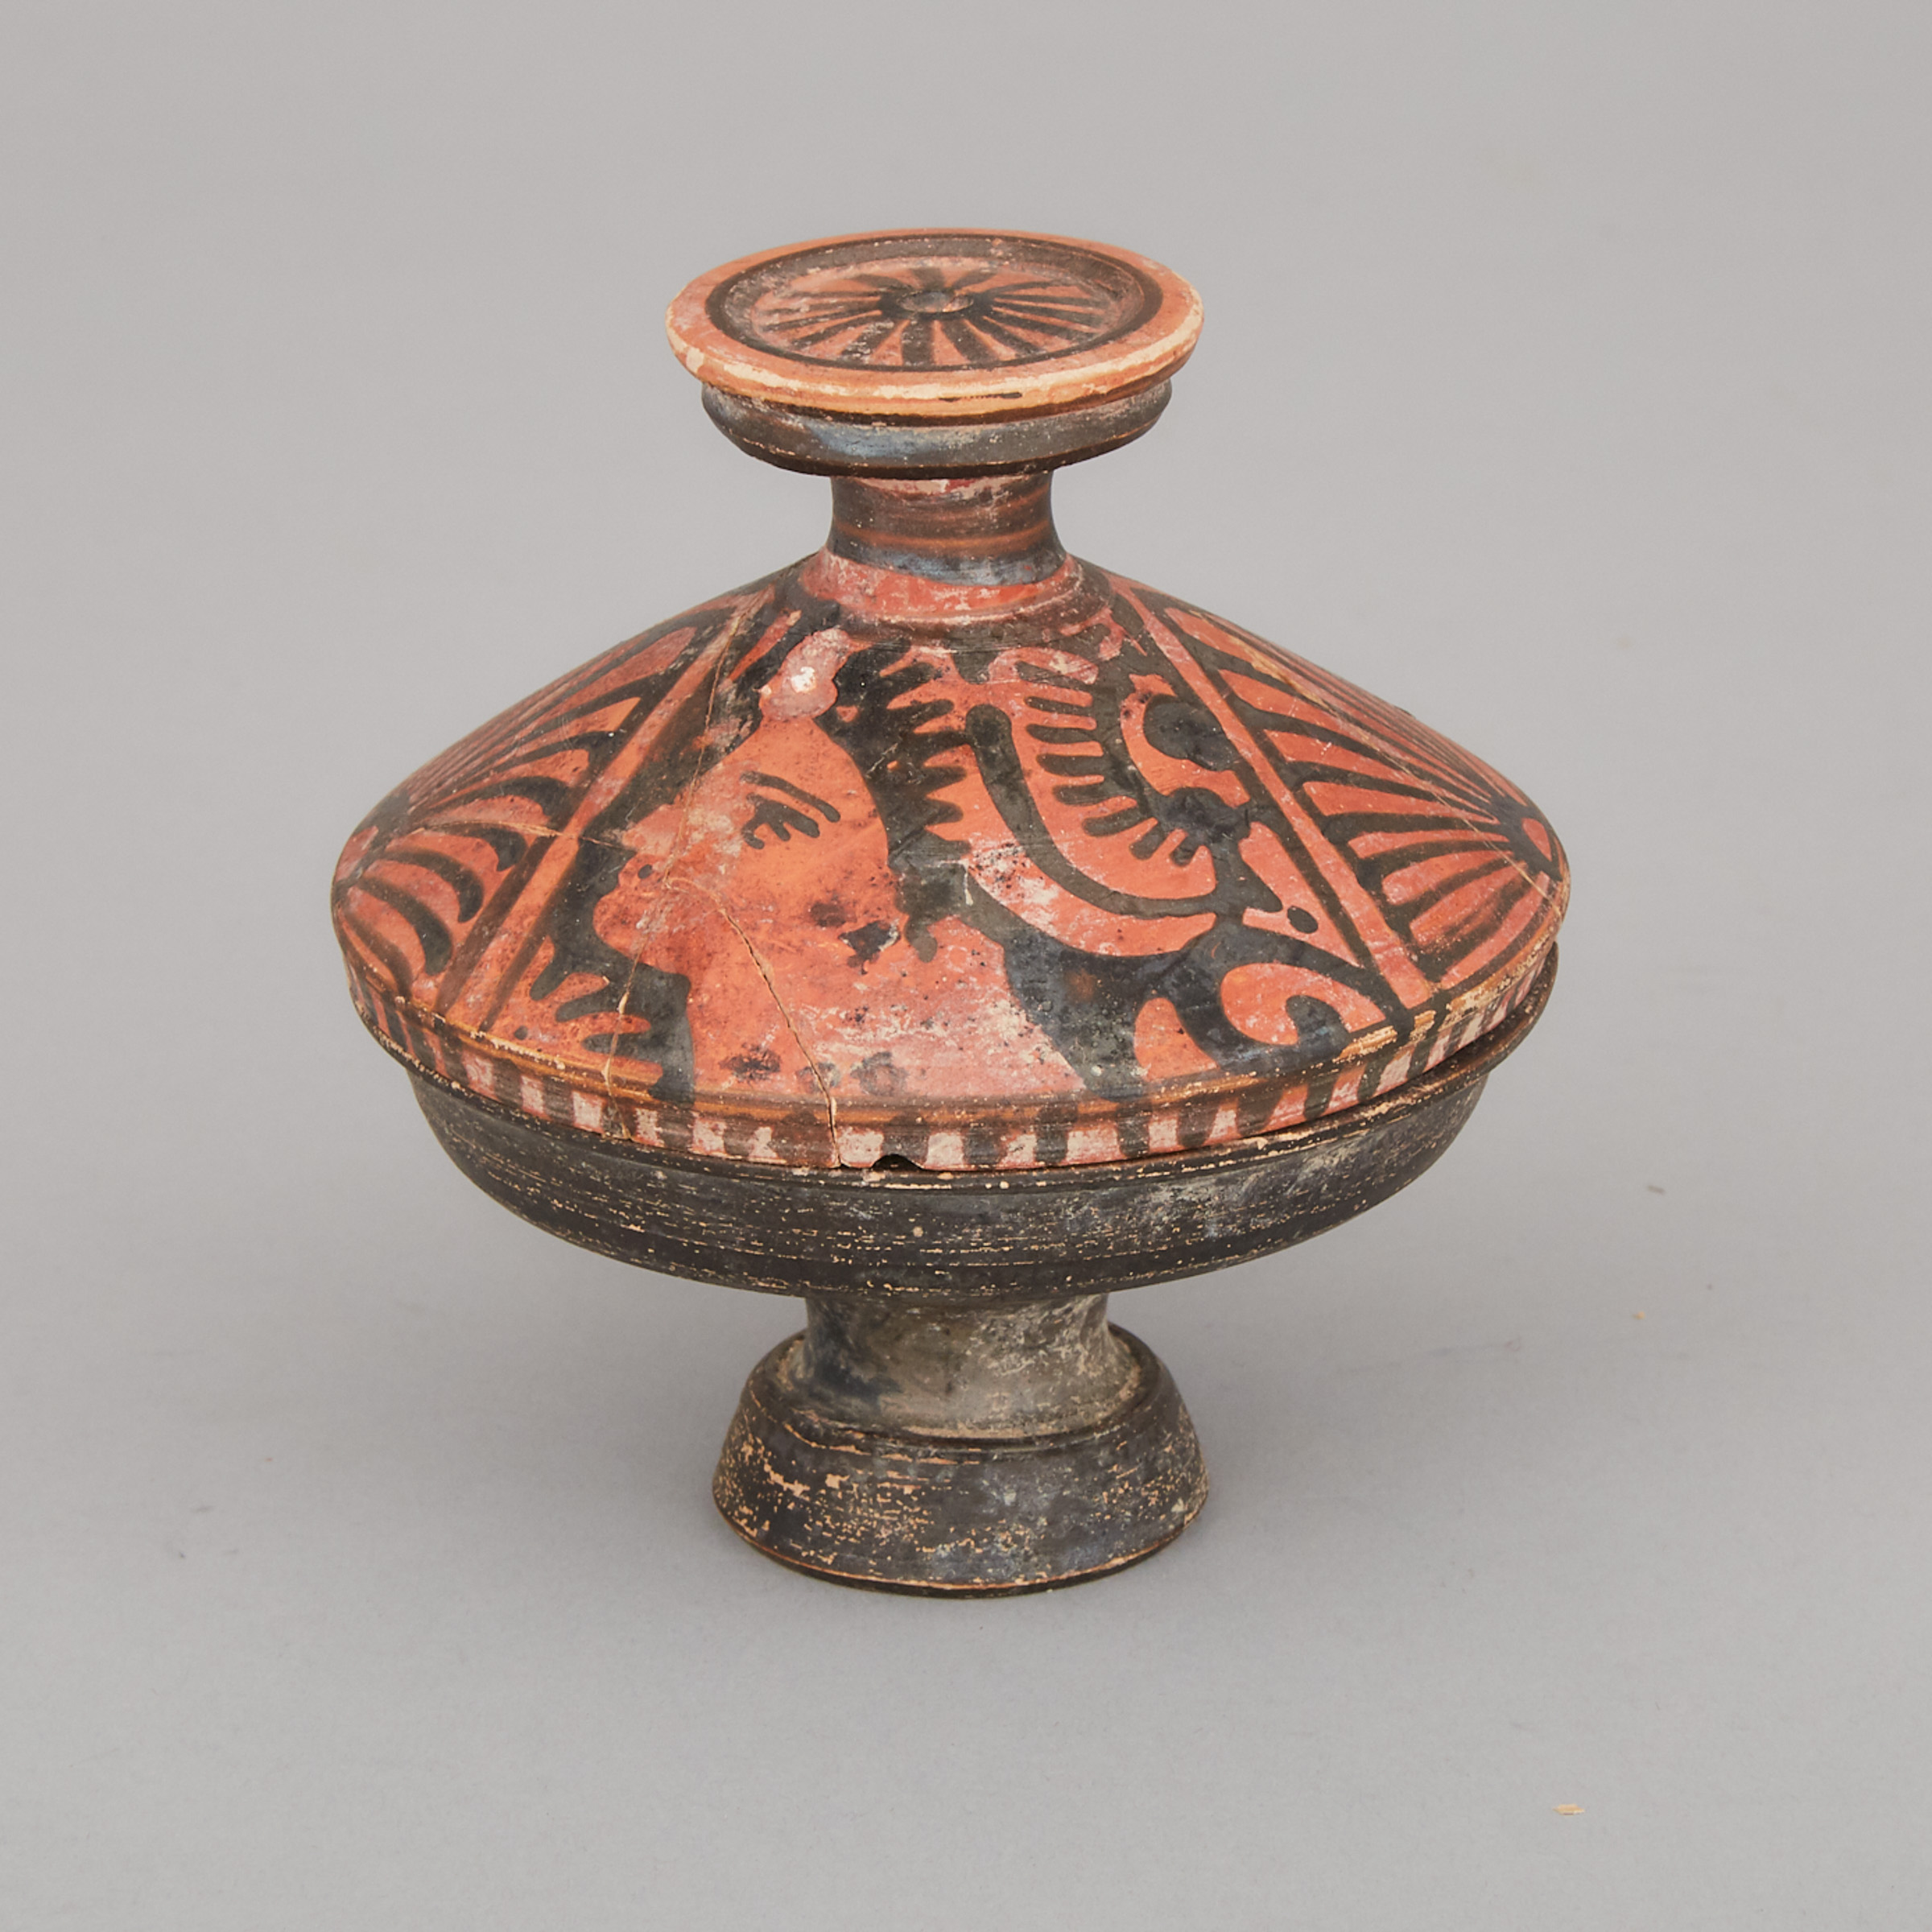 Apulian Red Figure Pottery Lekanis, 4th-3rd century B.C.